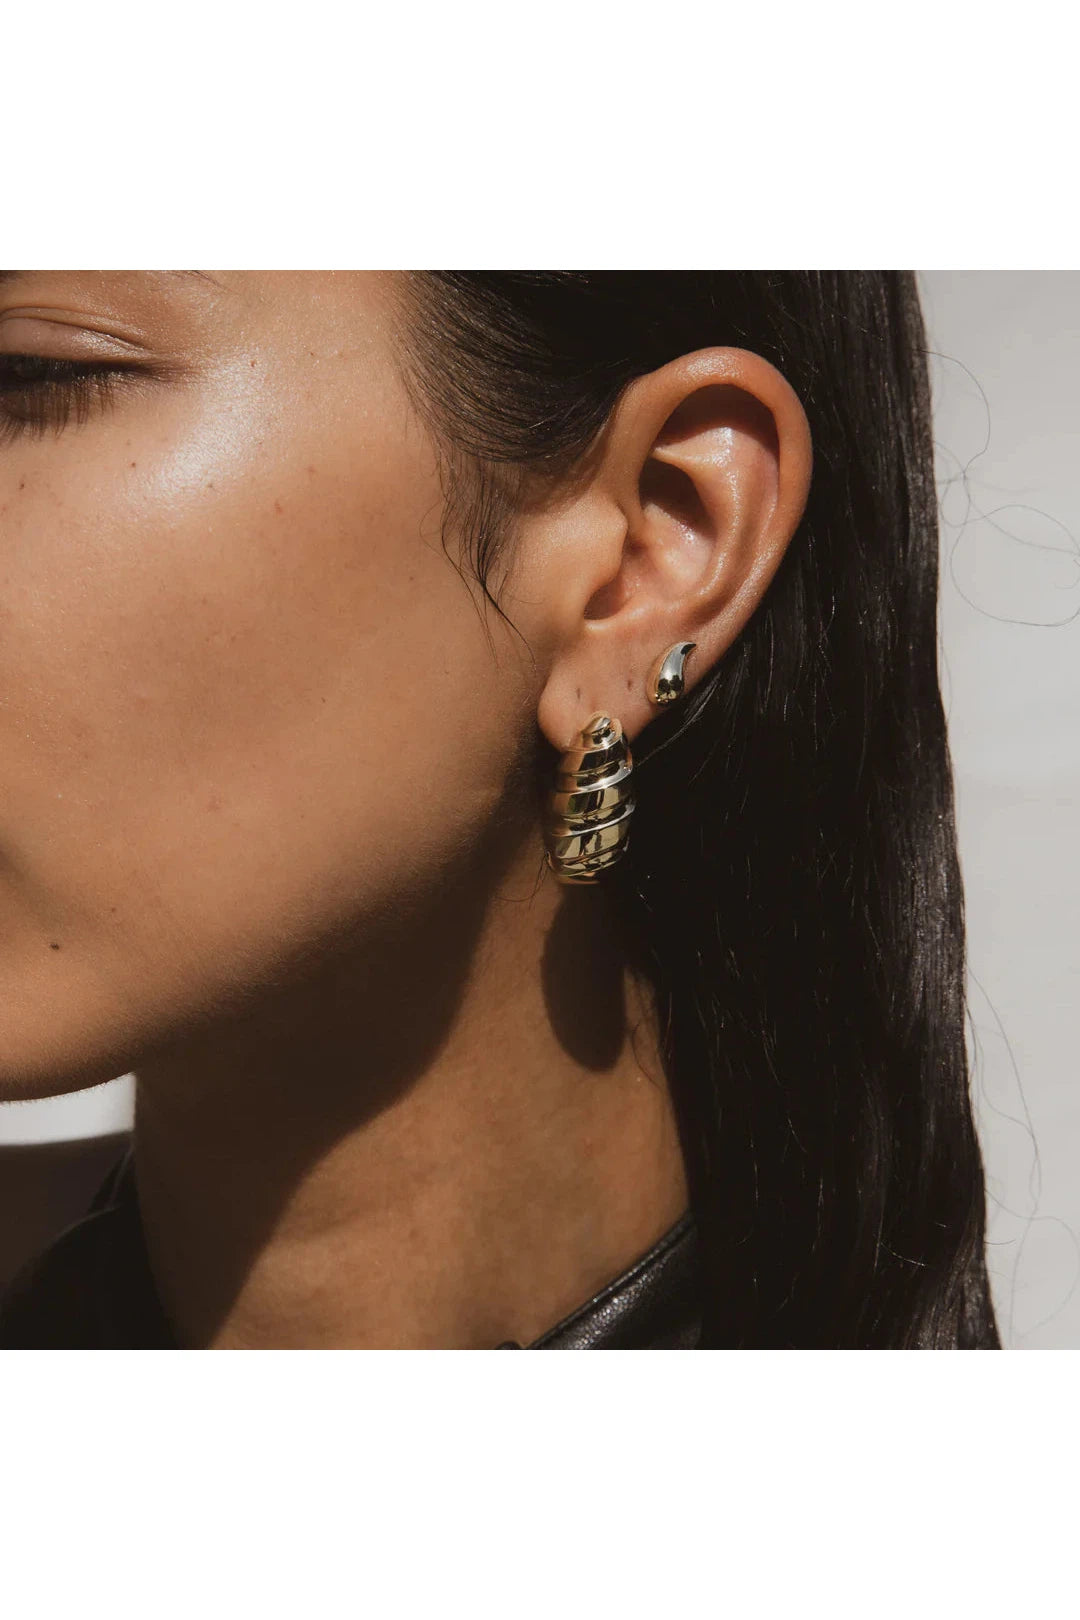 Droplet statement earrings, gold